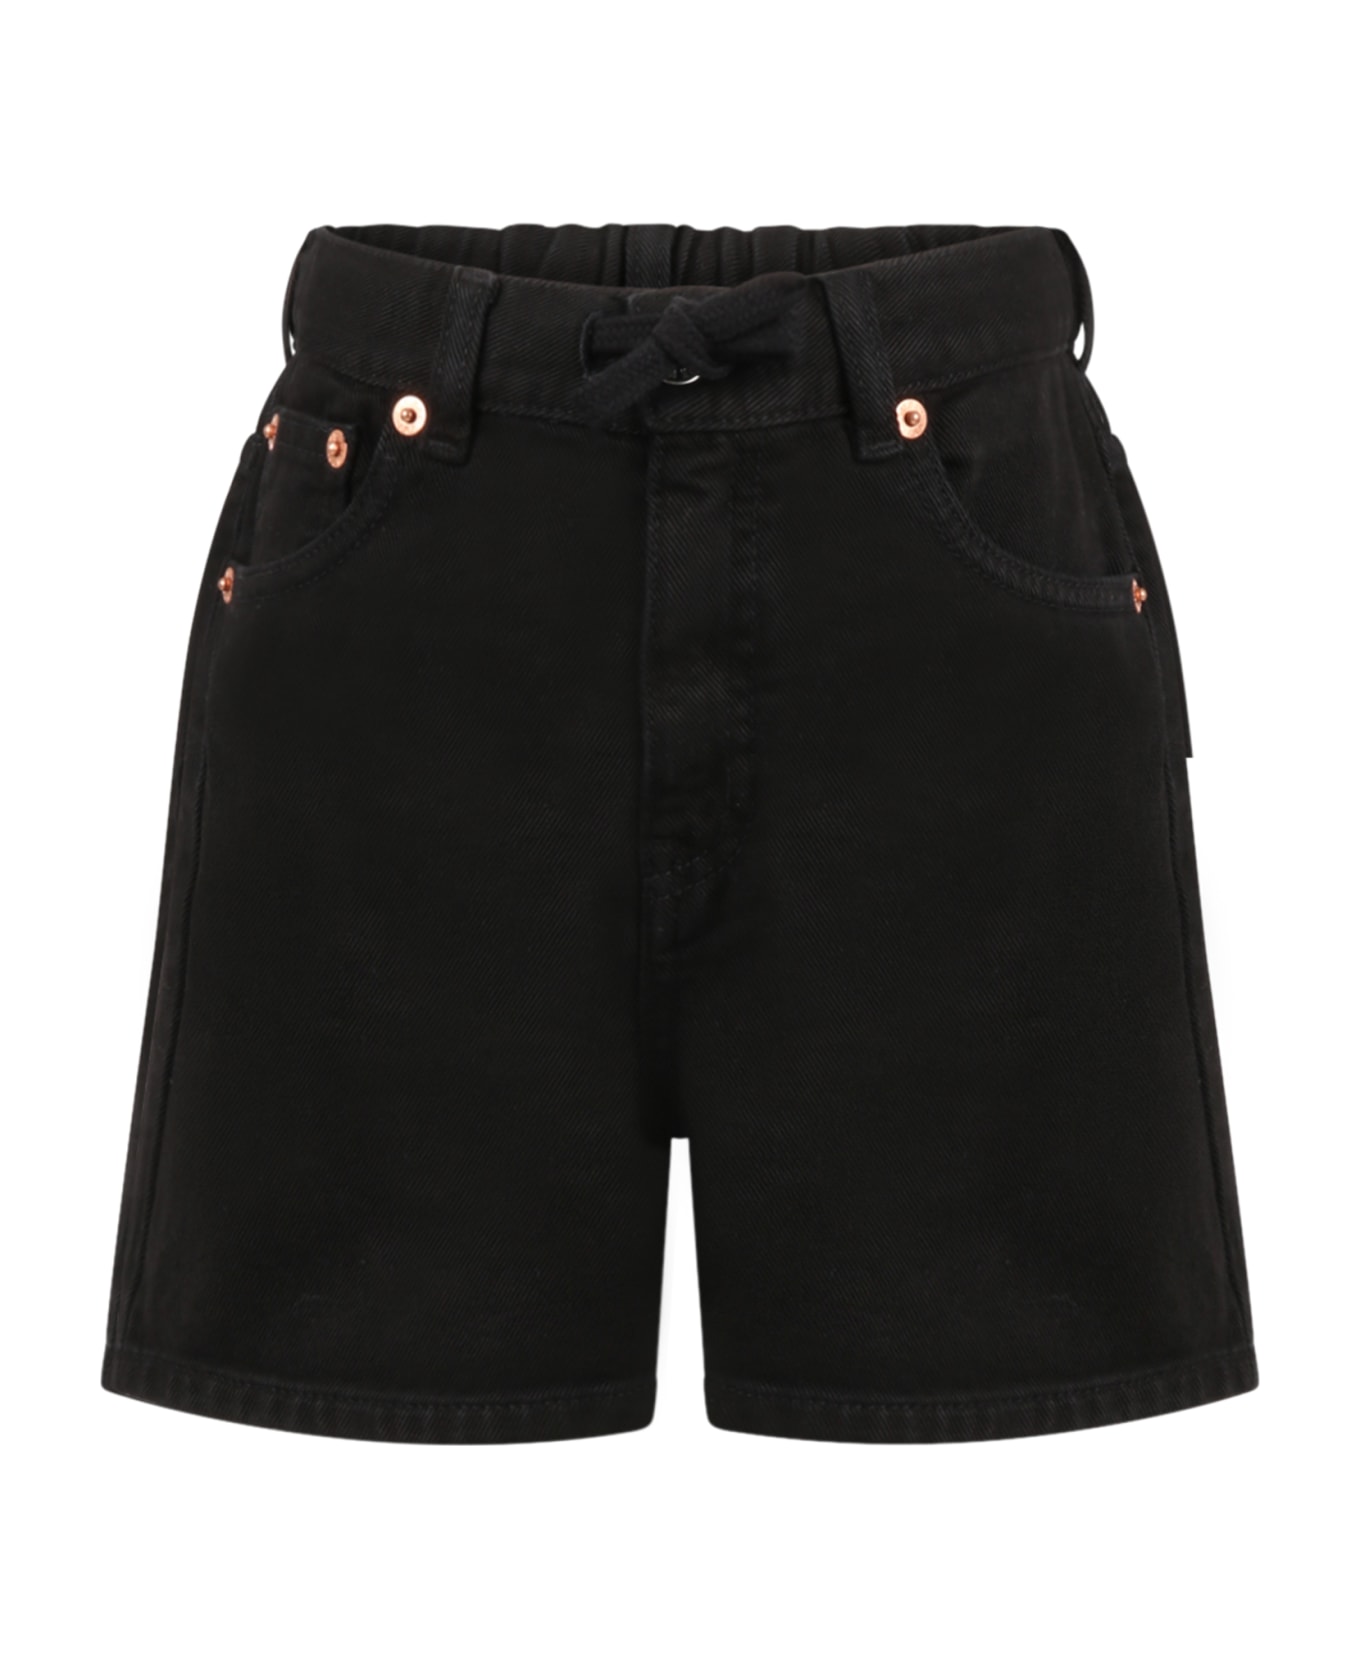 MM6 Maison Margiela Black Shorts For Girl - Black ボトムス